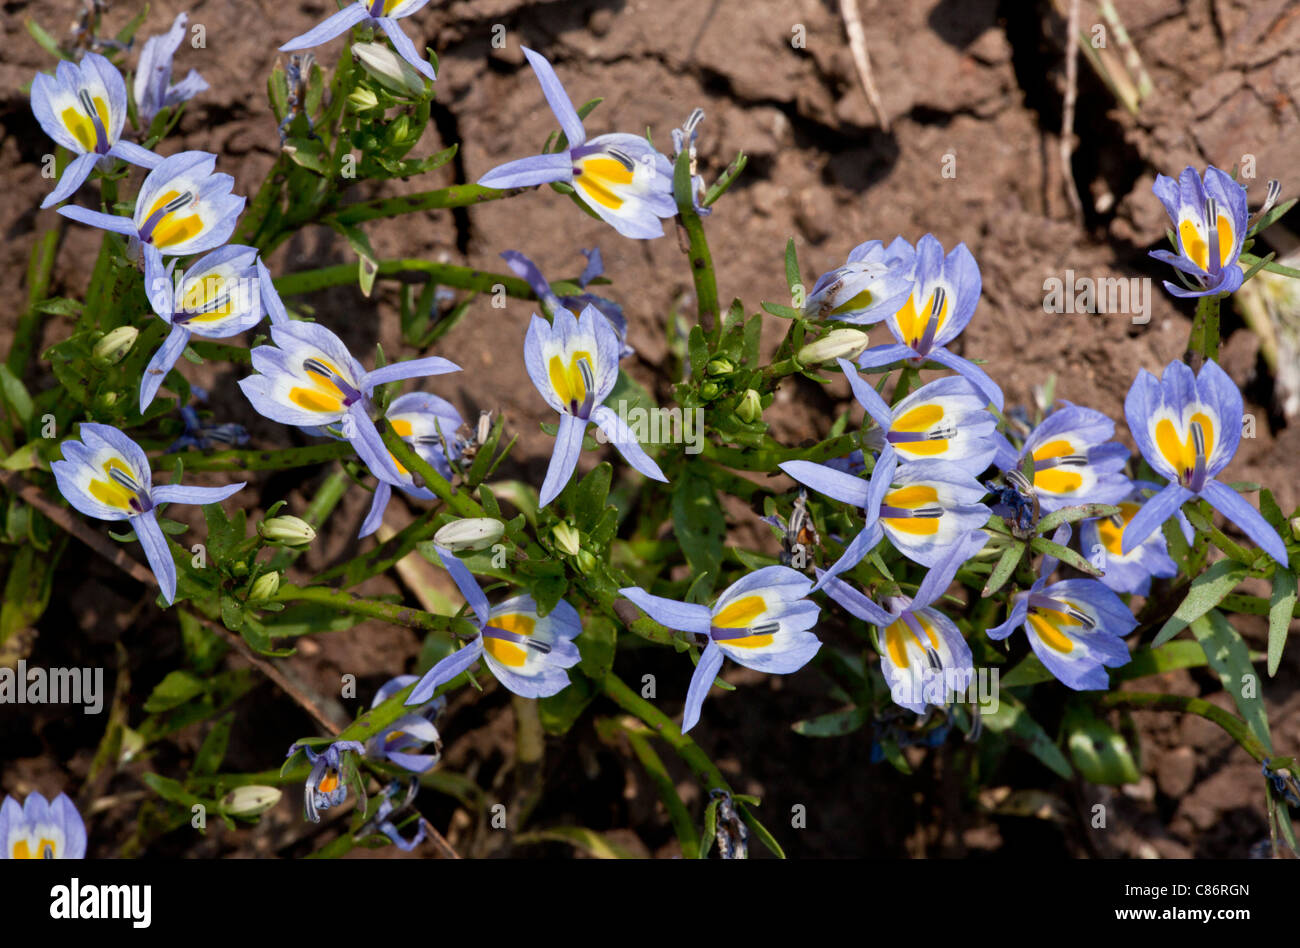 Calicoflower, Downingia sp. in flower, California Stock Photo